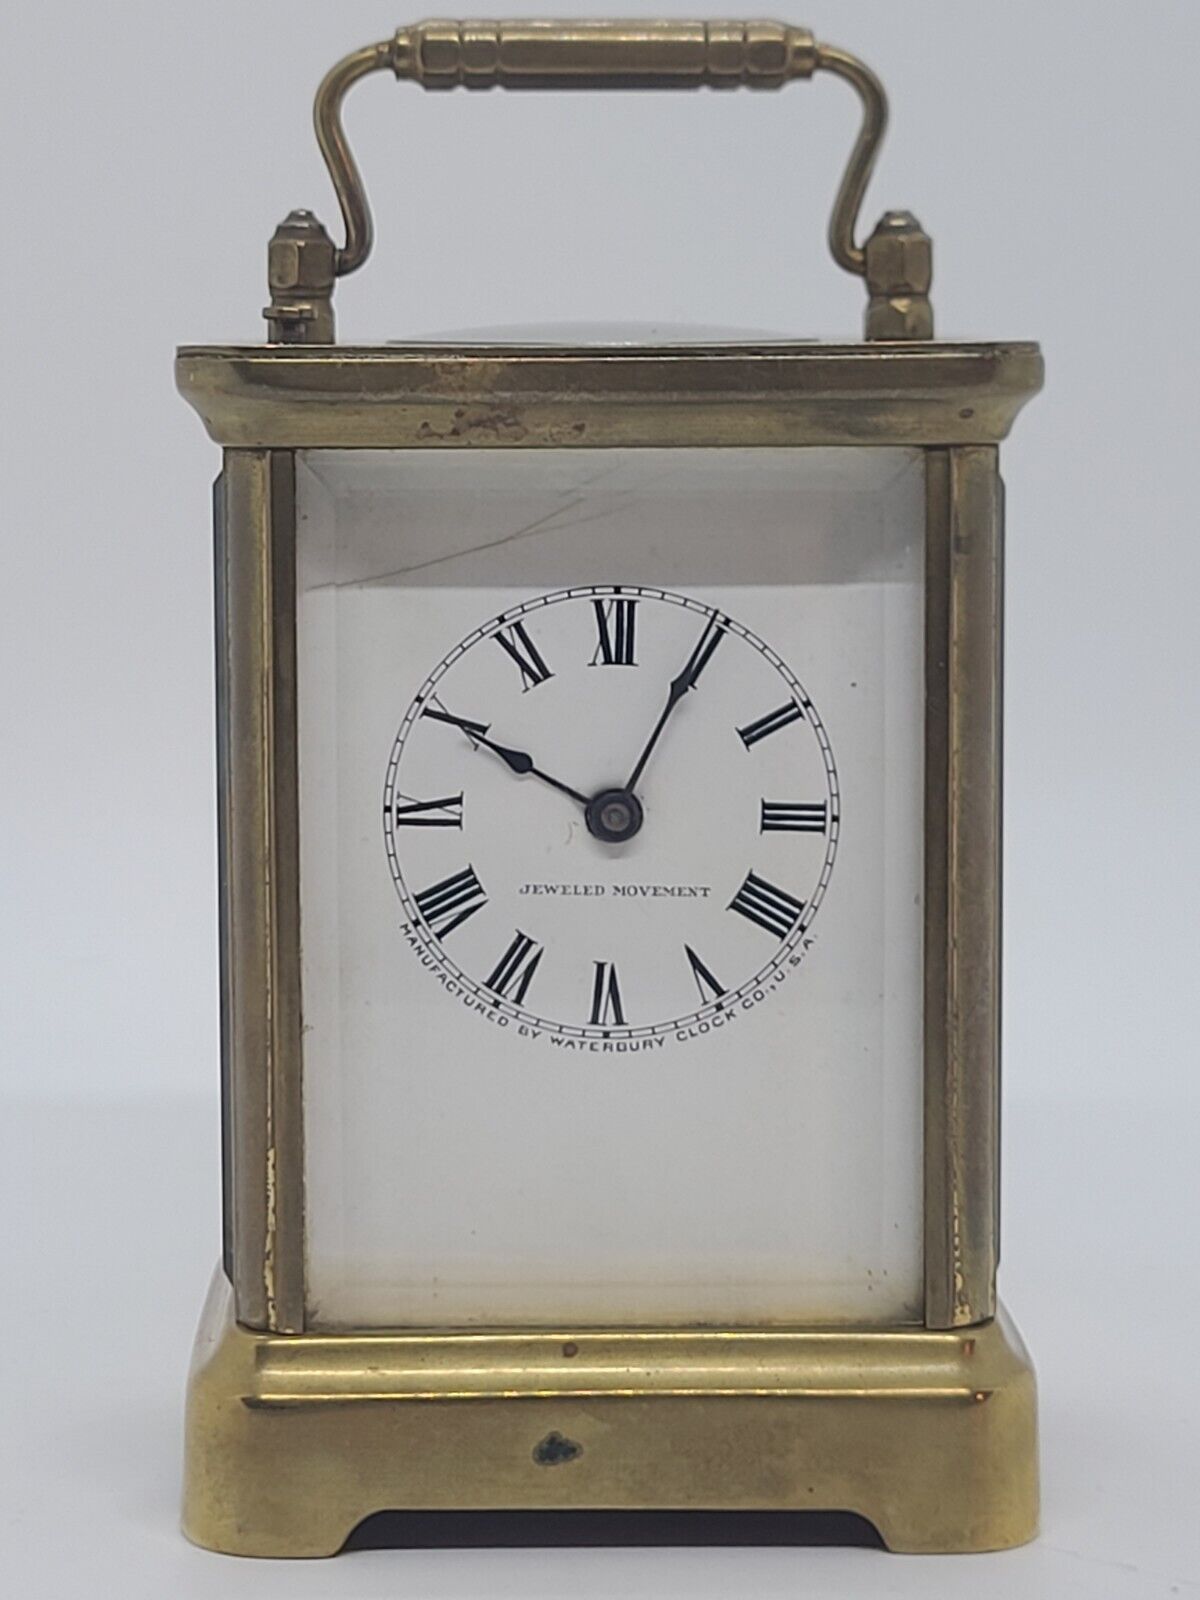 1907 WATERBURY Repeater Brass & Beveled Glass Time & Strike Carriage Alarm Clock